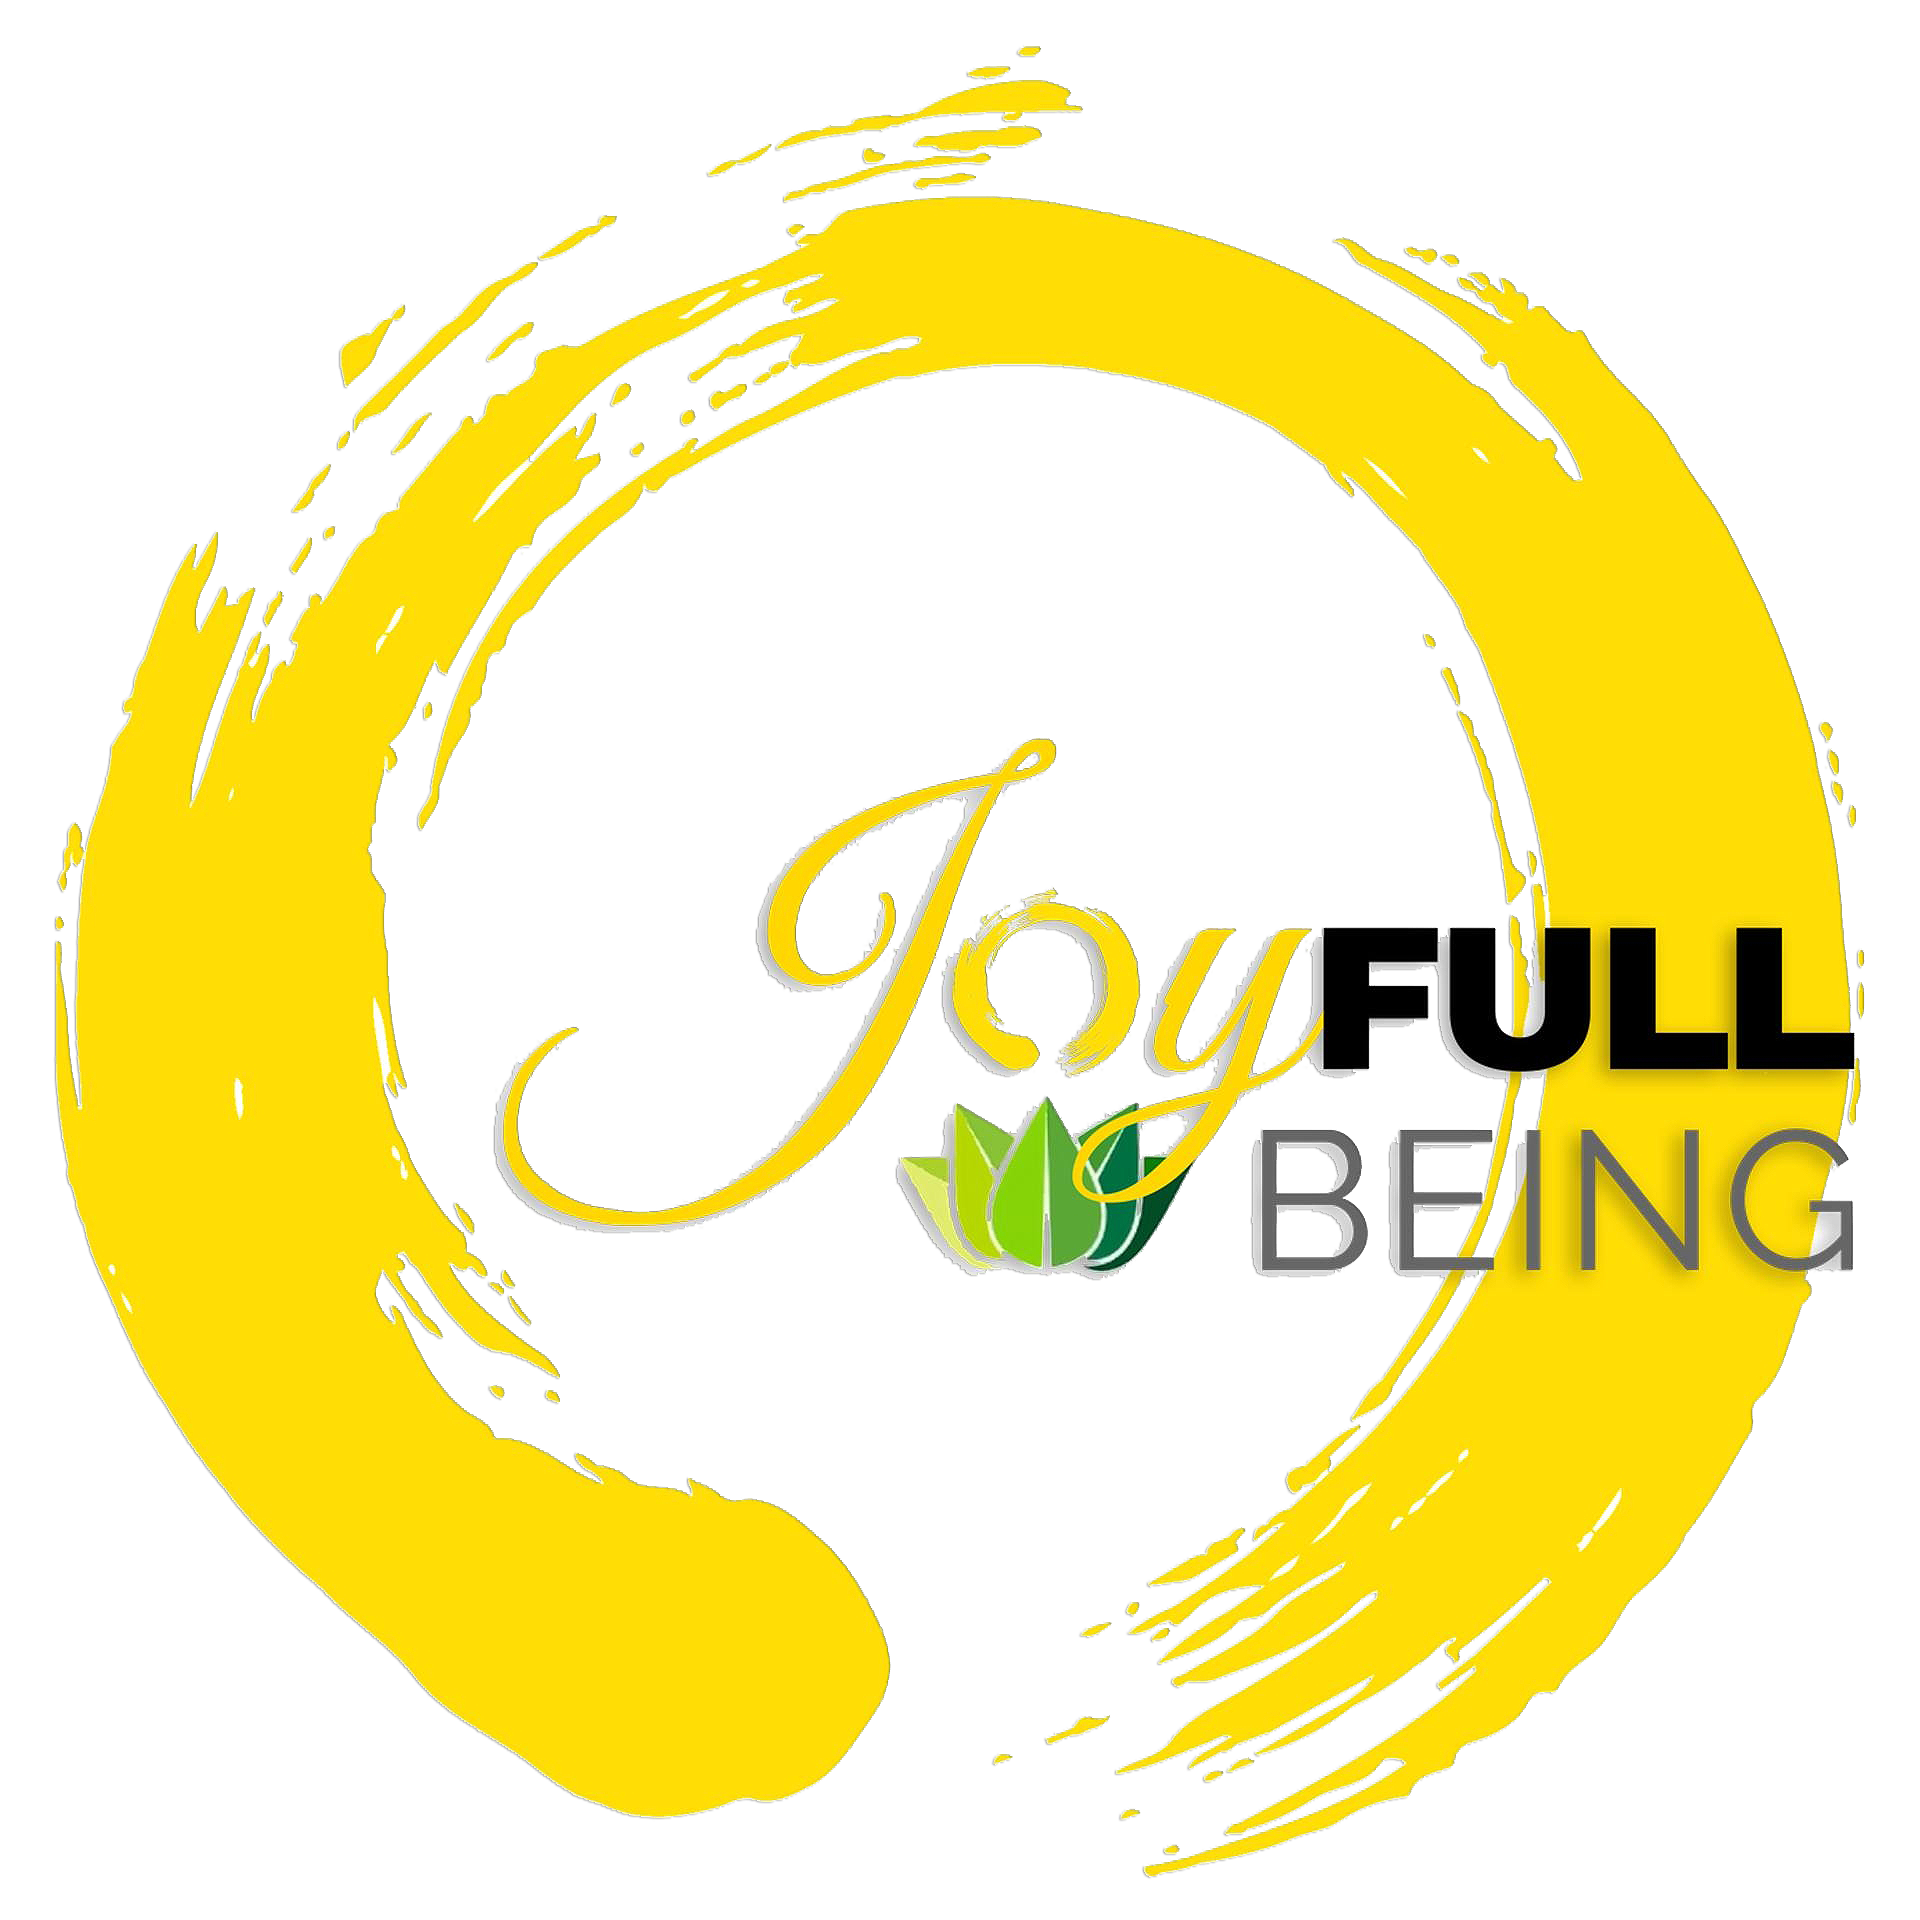 JoyFULL Being